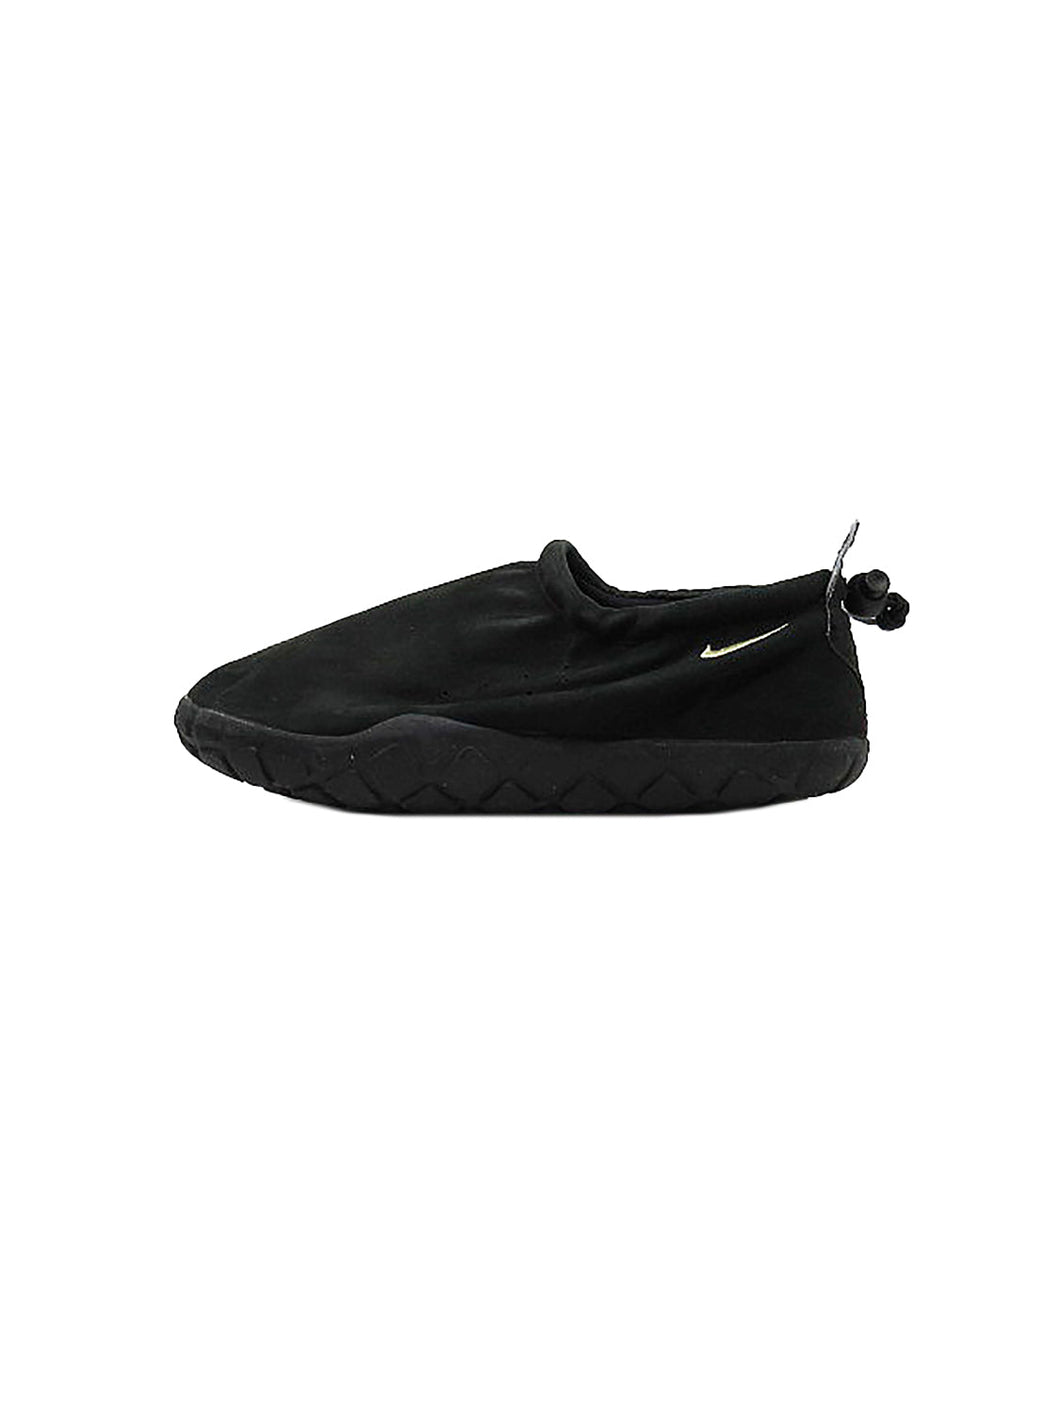 Nike ACG Soft Black Moc Shoes